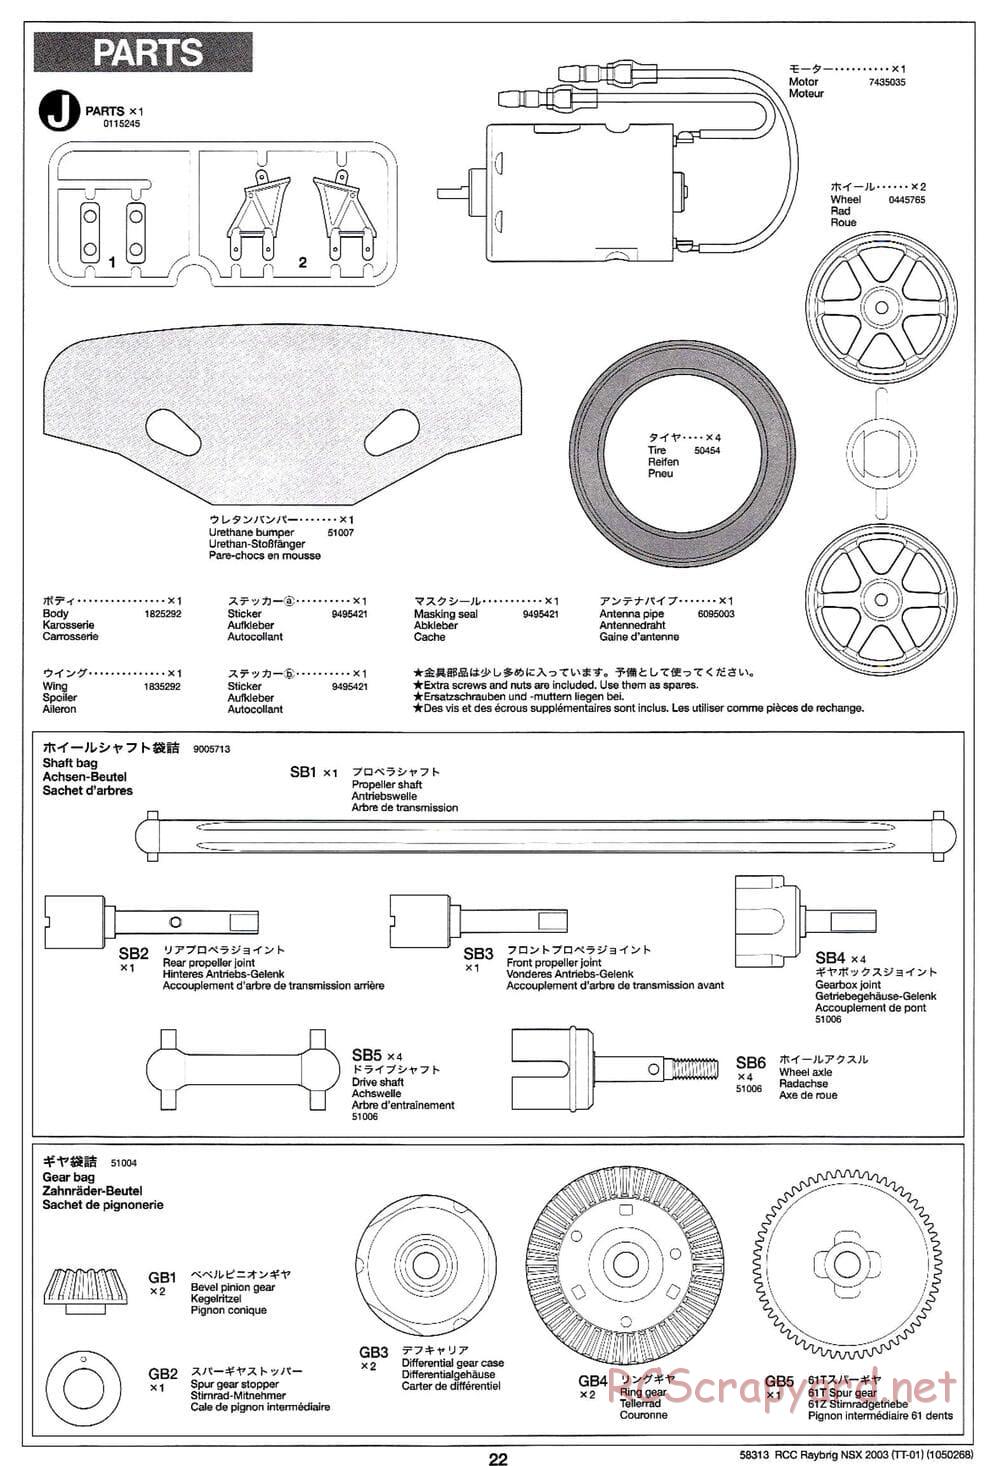 Tamiya - Raybrig NSX 2003 - TT-01 Chassis - Manual - Page 22